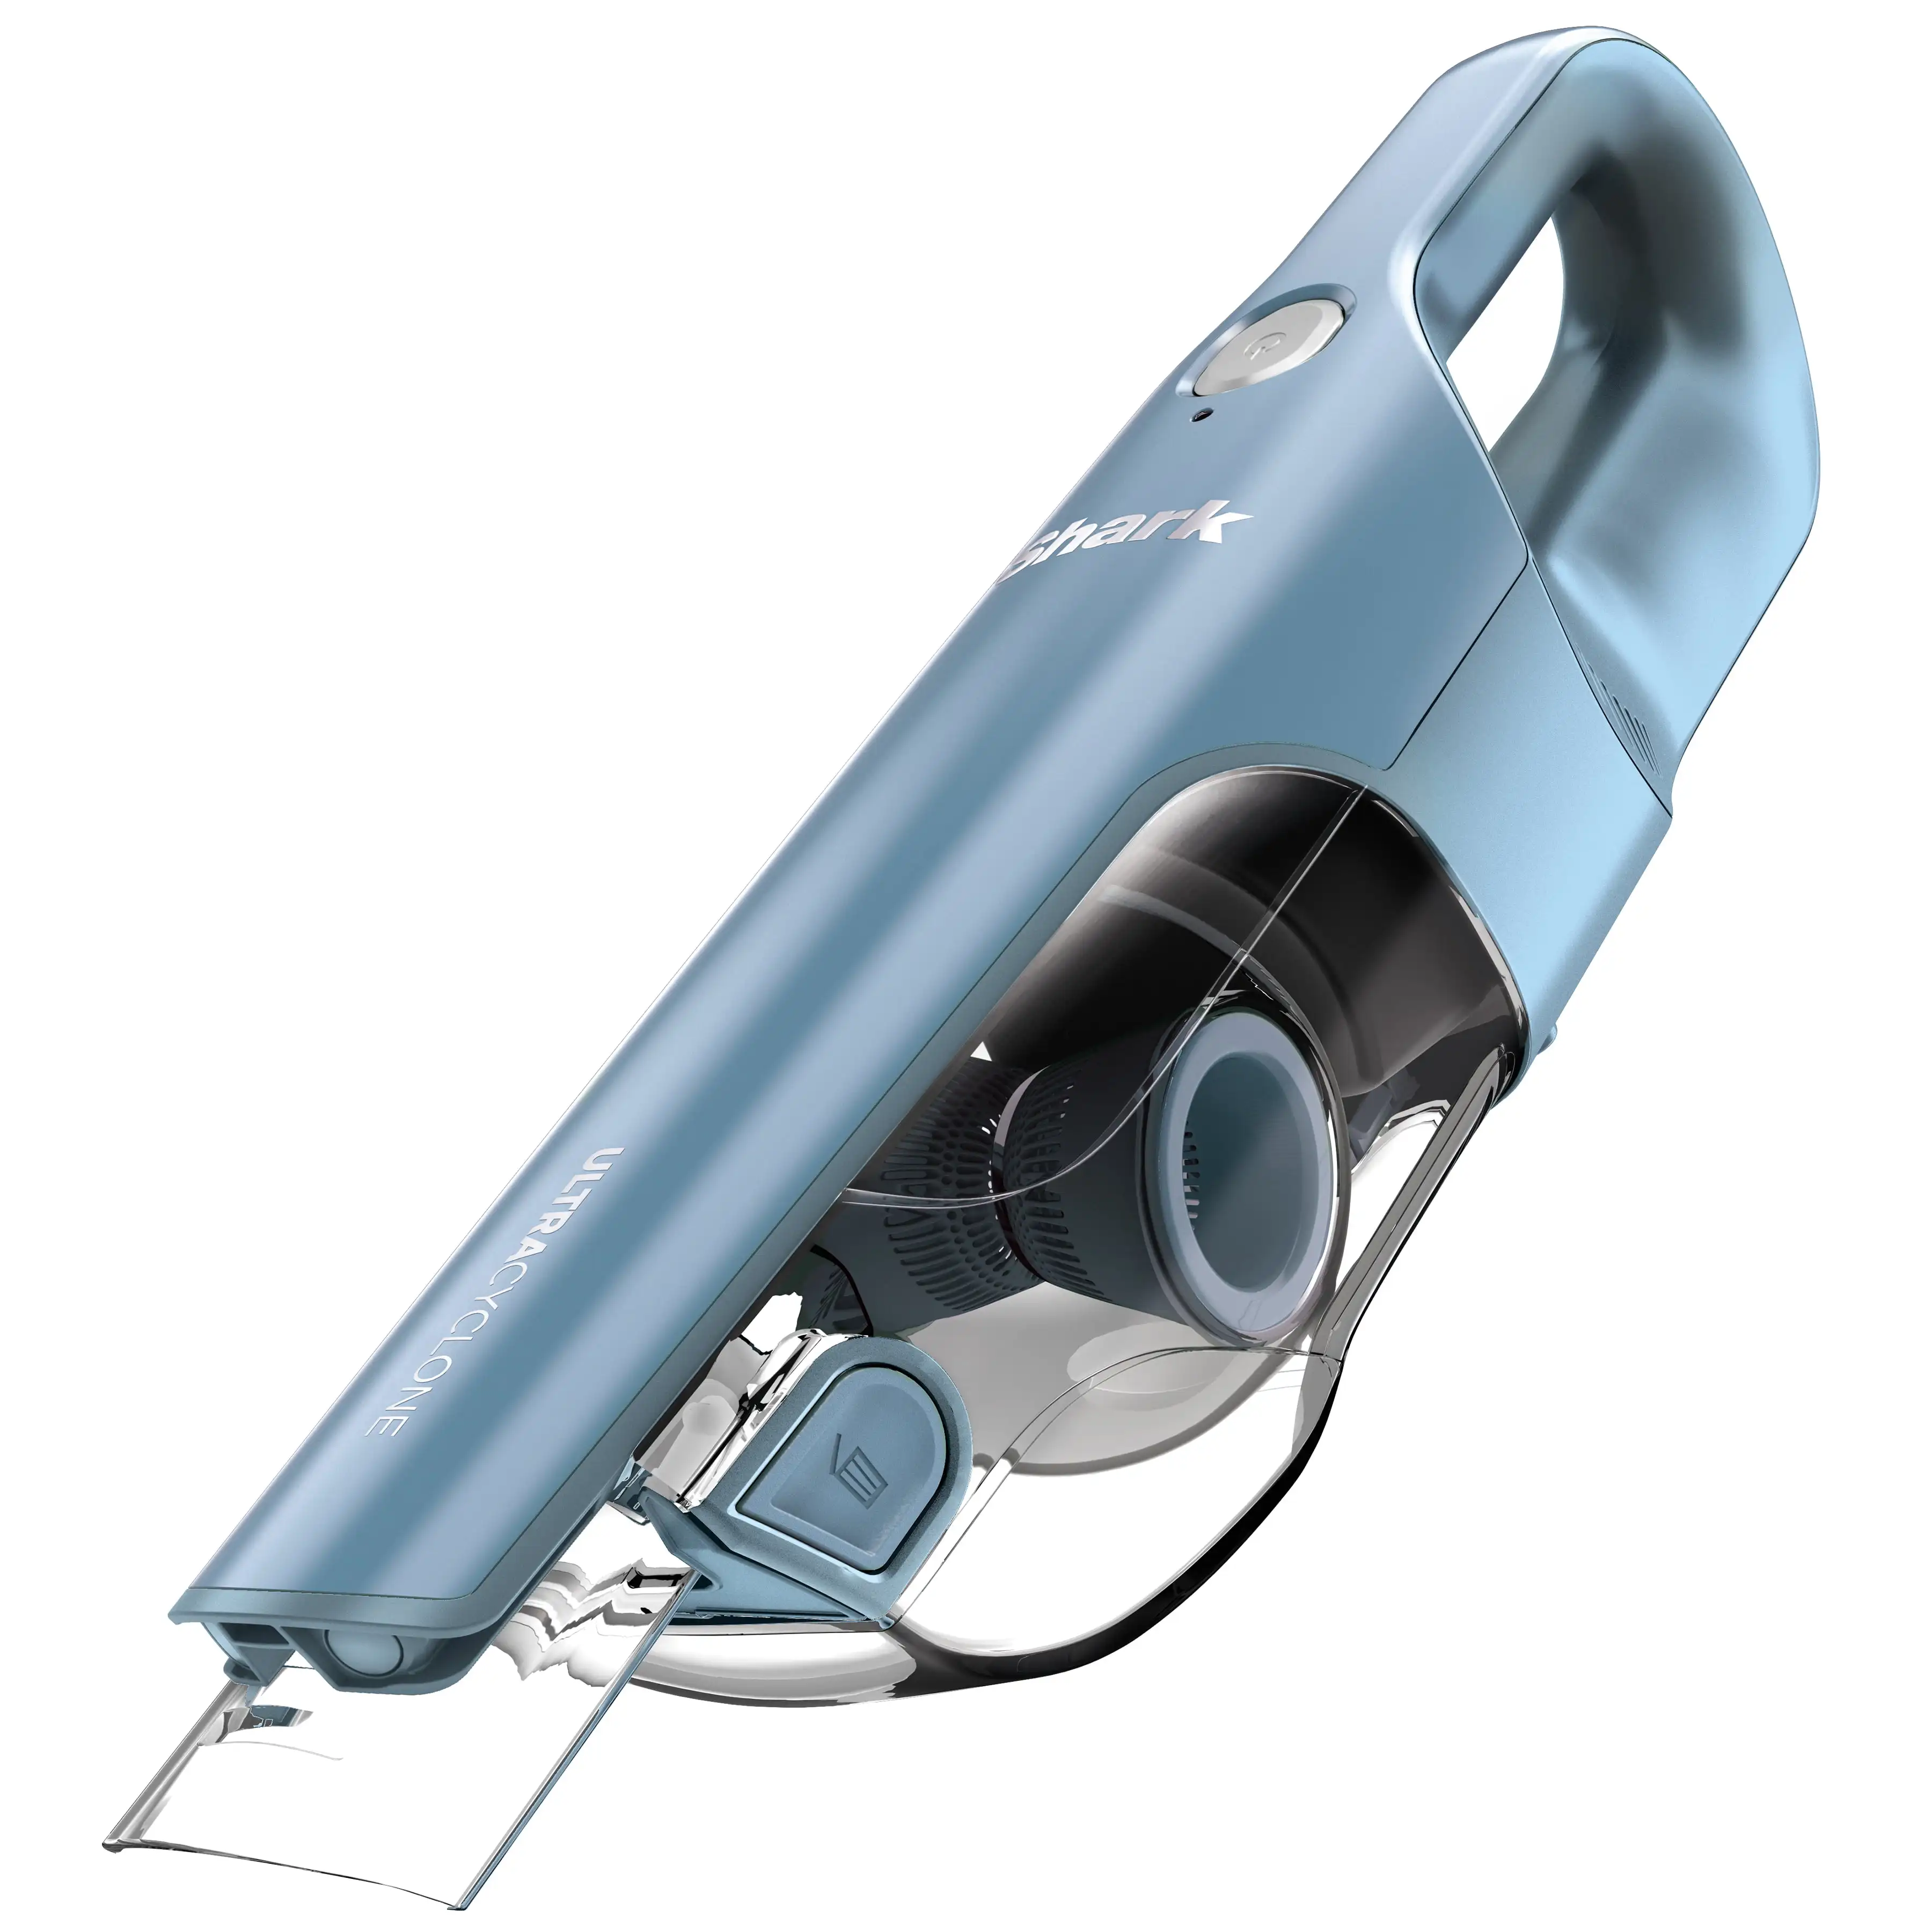 

Ultra Cyclone Pro Cordless Handheld Vacuum, CH900WM home appliance